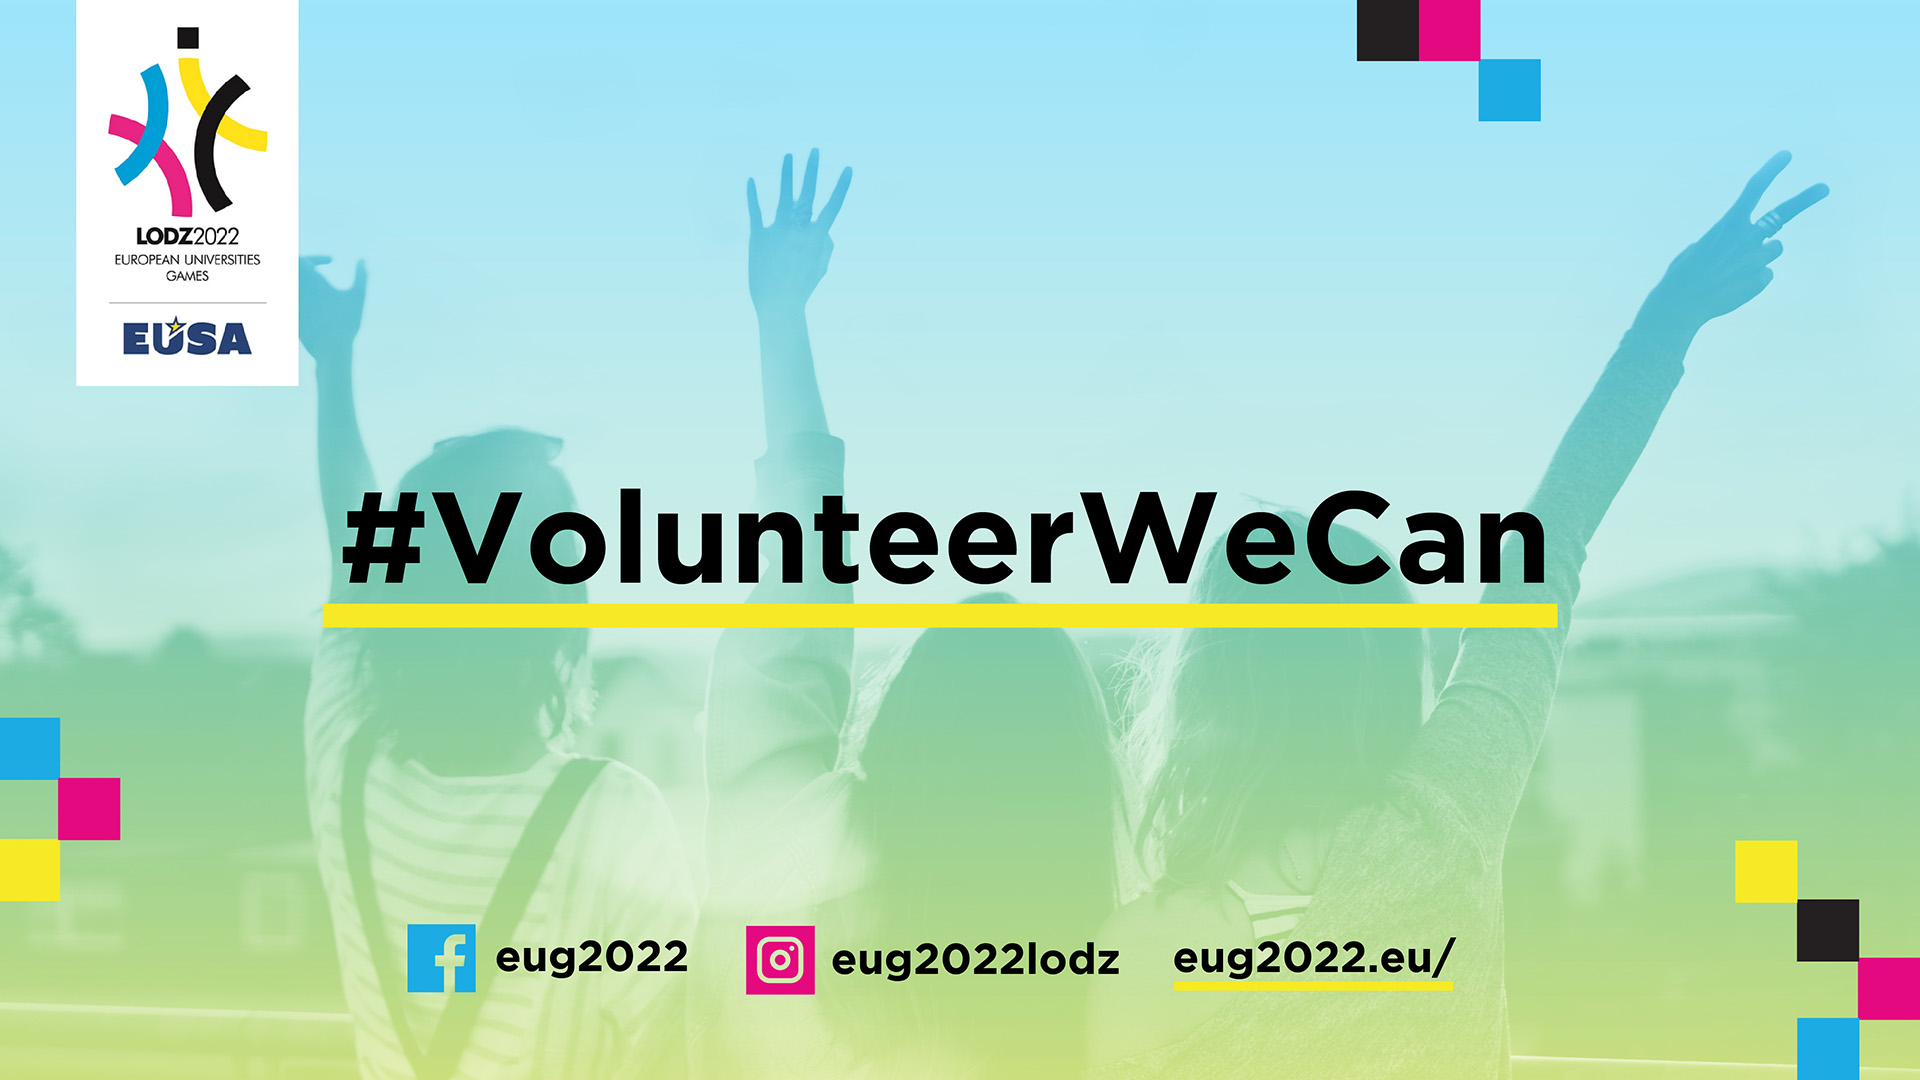 EUG2022 Volunteering